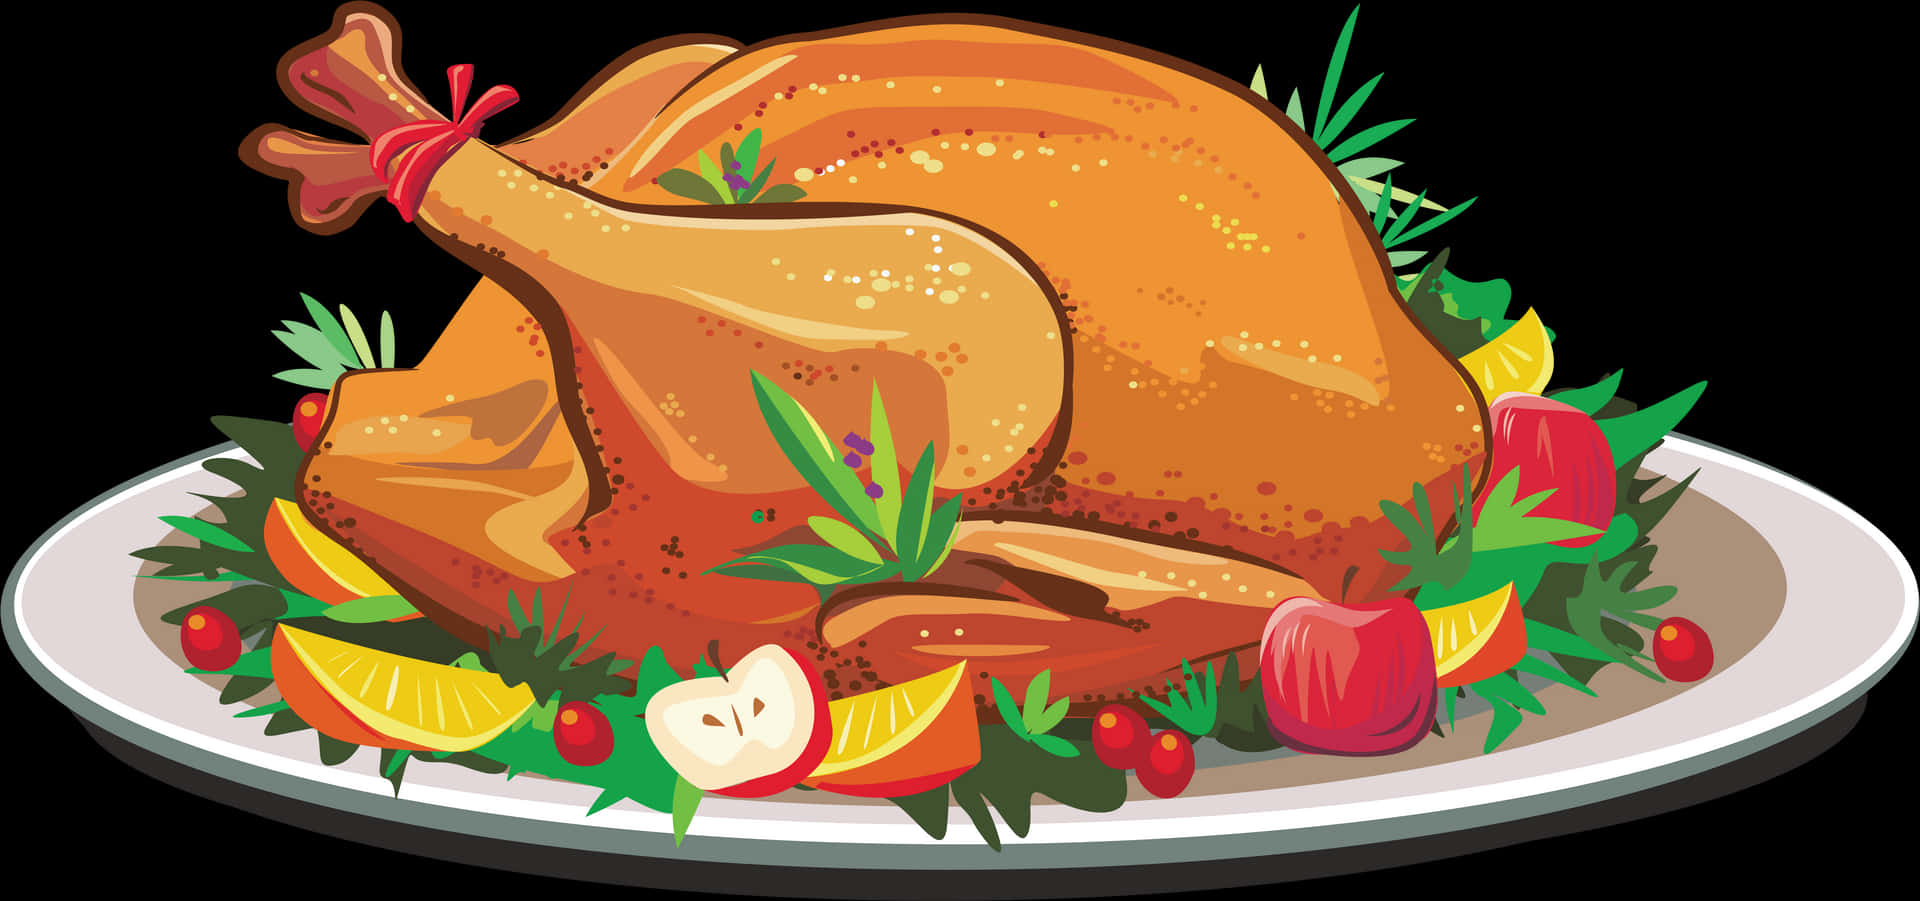 Roasted Turkey Dish Illustration PNG